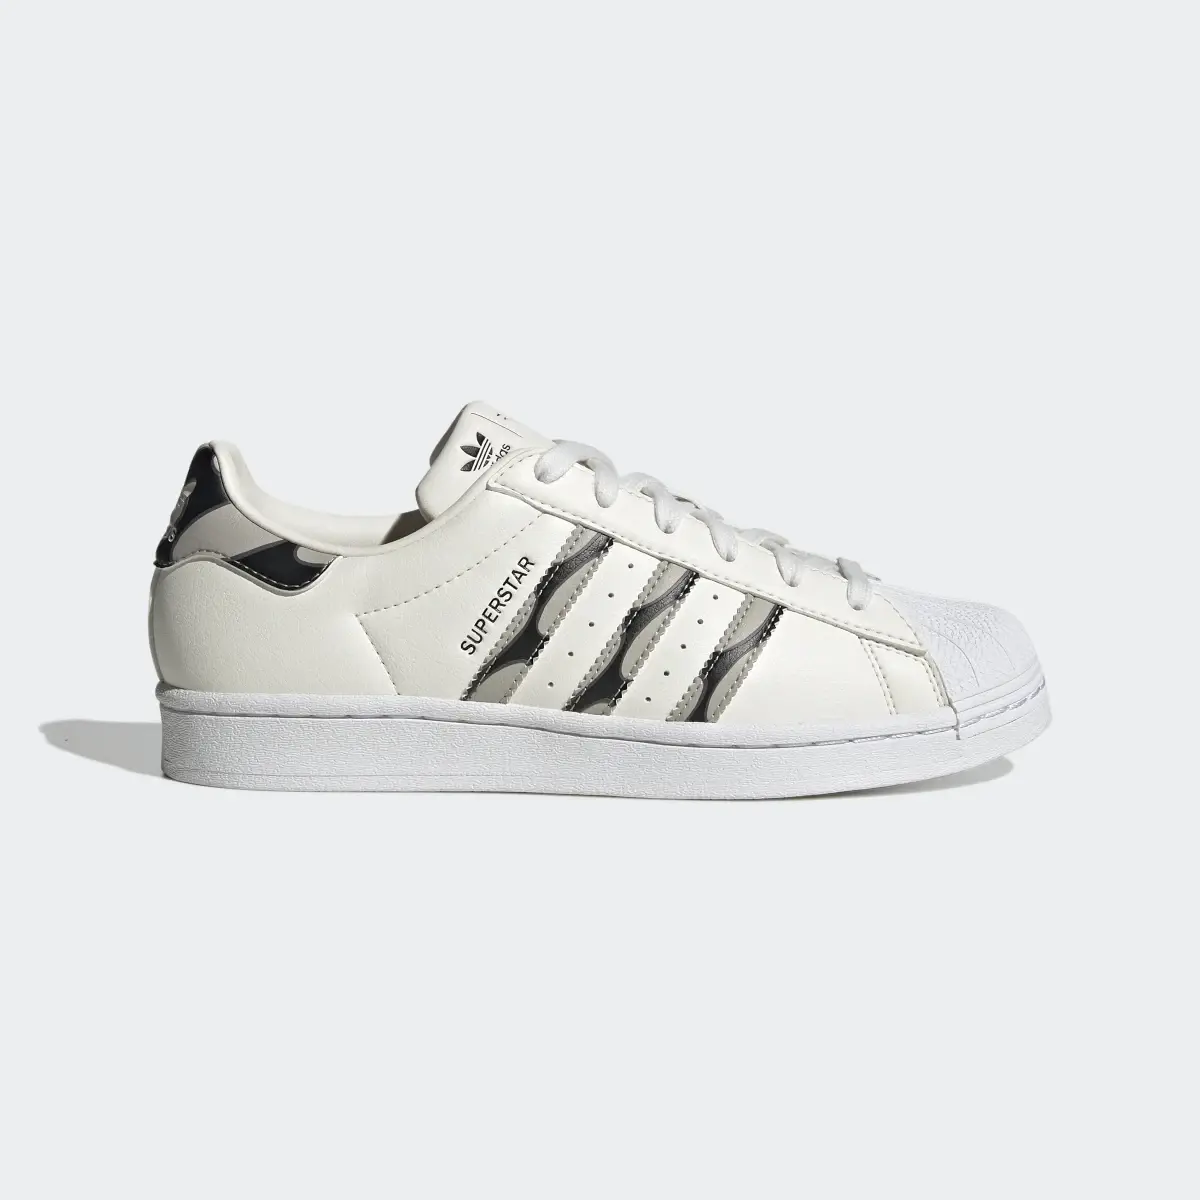 Adidas x Marimekko Superstar Schuh. 2